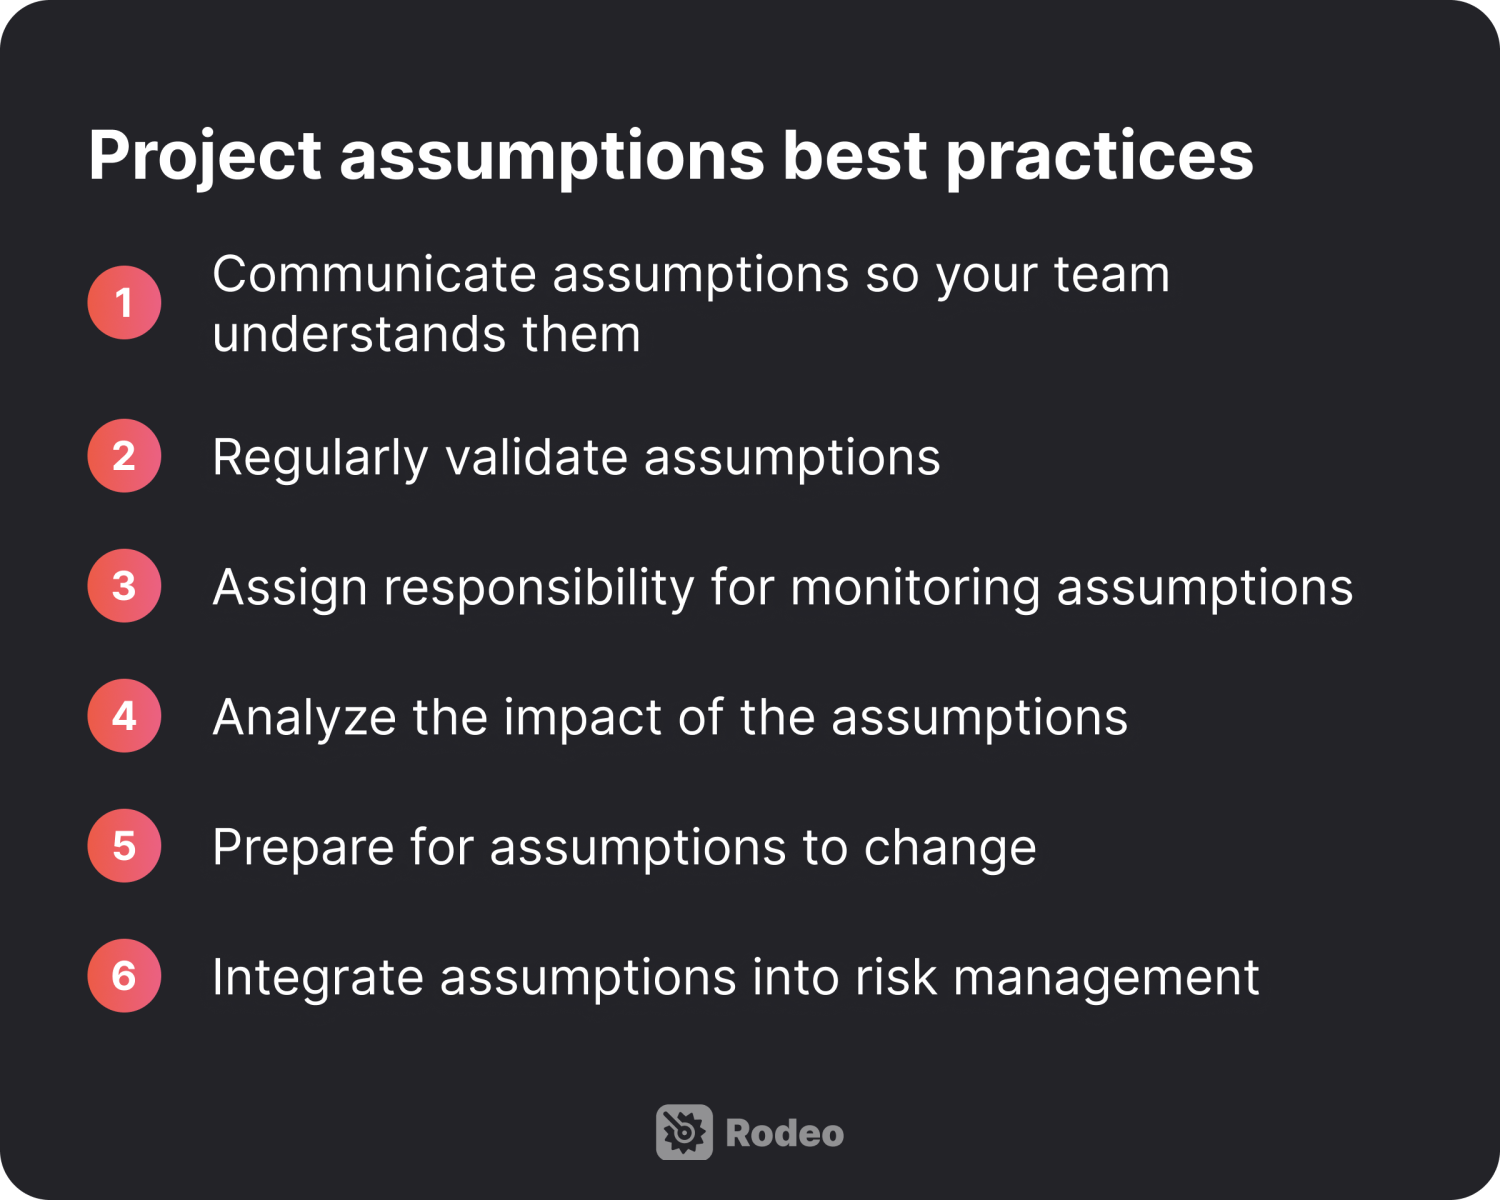 Project assumptions best practices listed